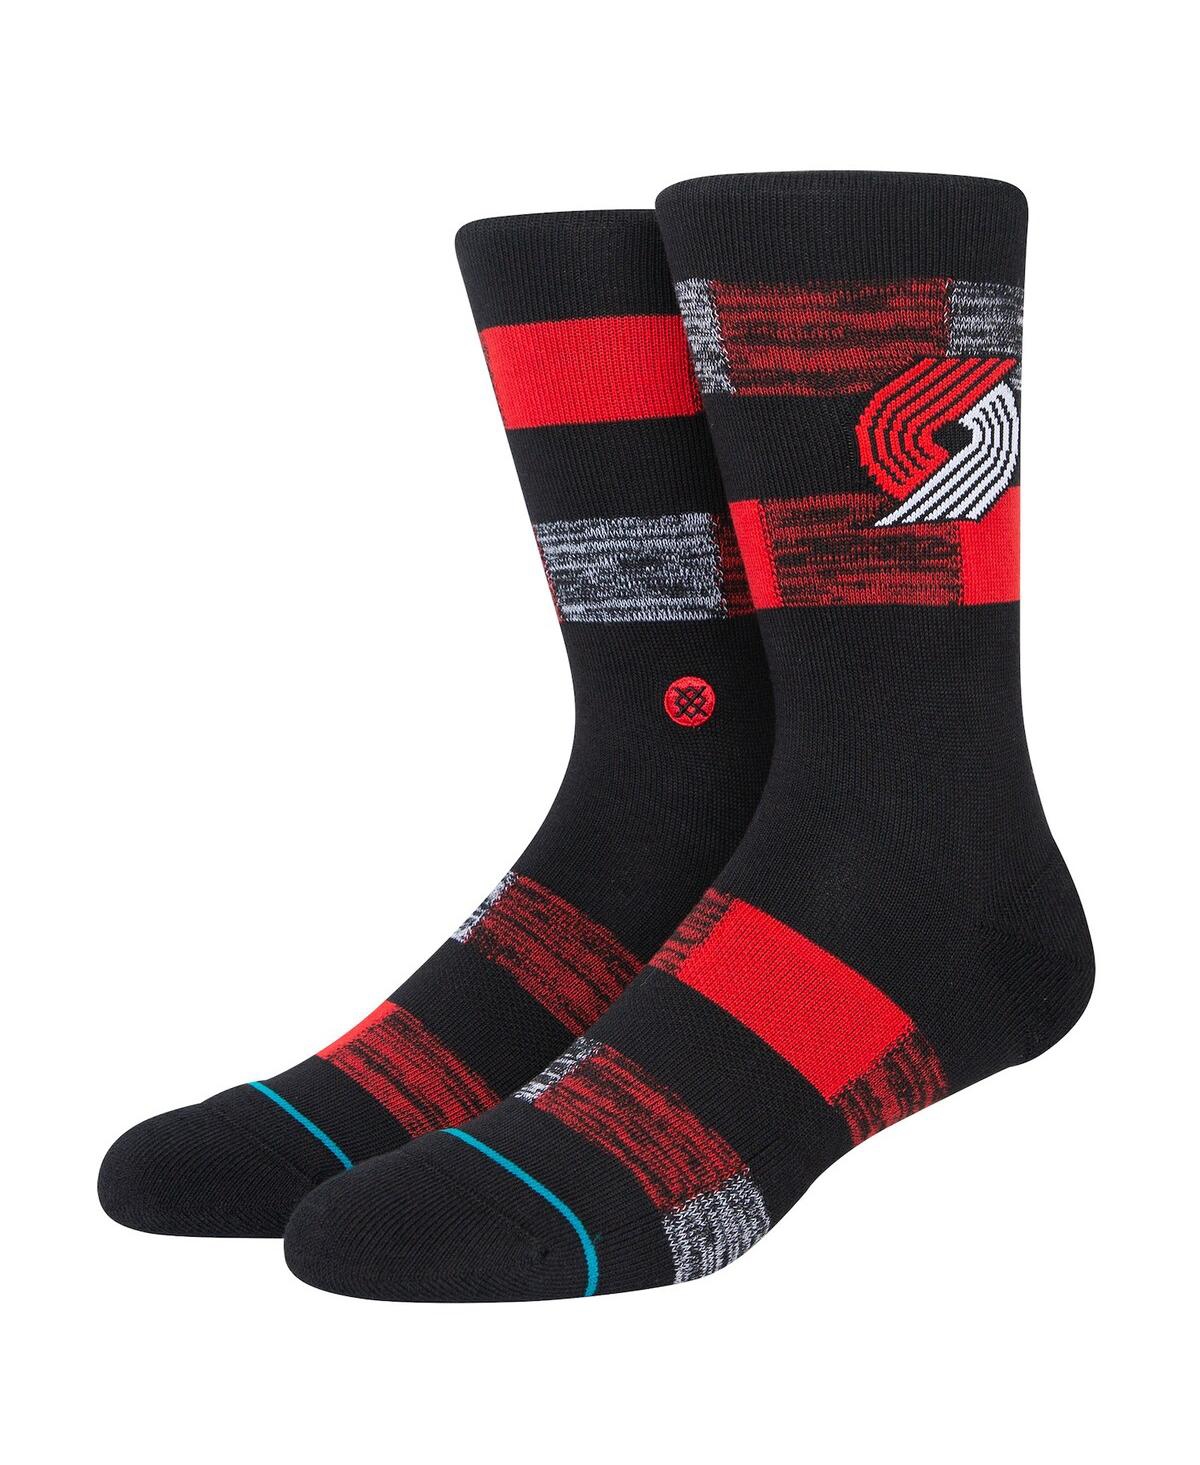 Men's Stance Portland Trail Blazers Cryptic Crew Socks - Black